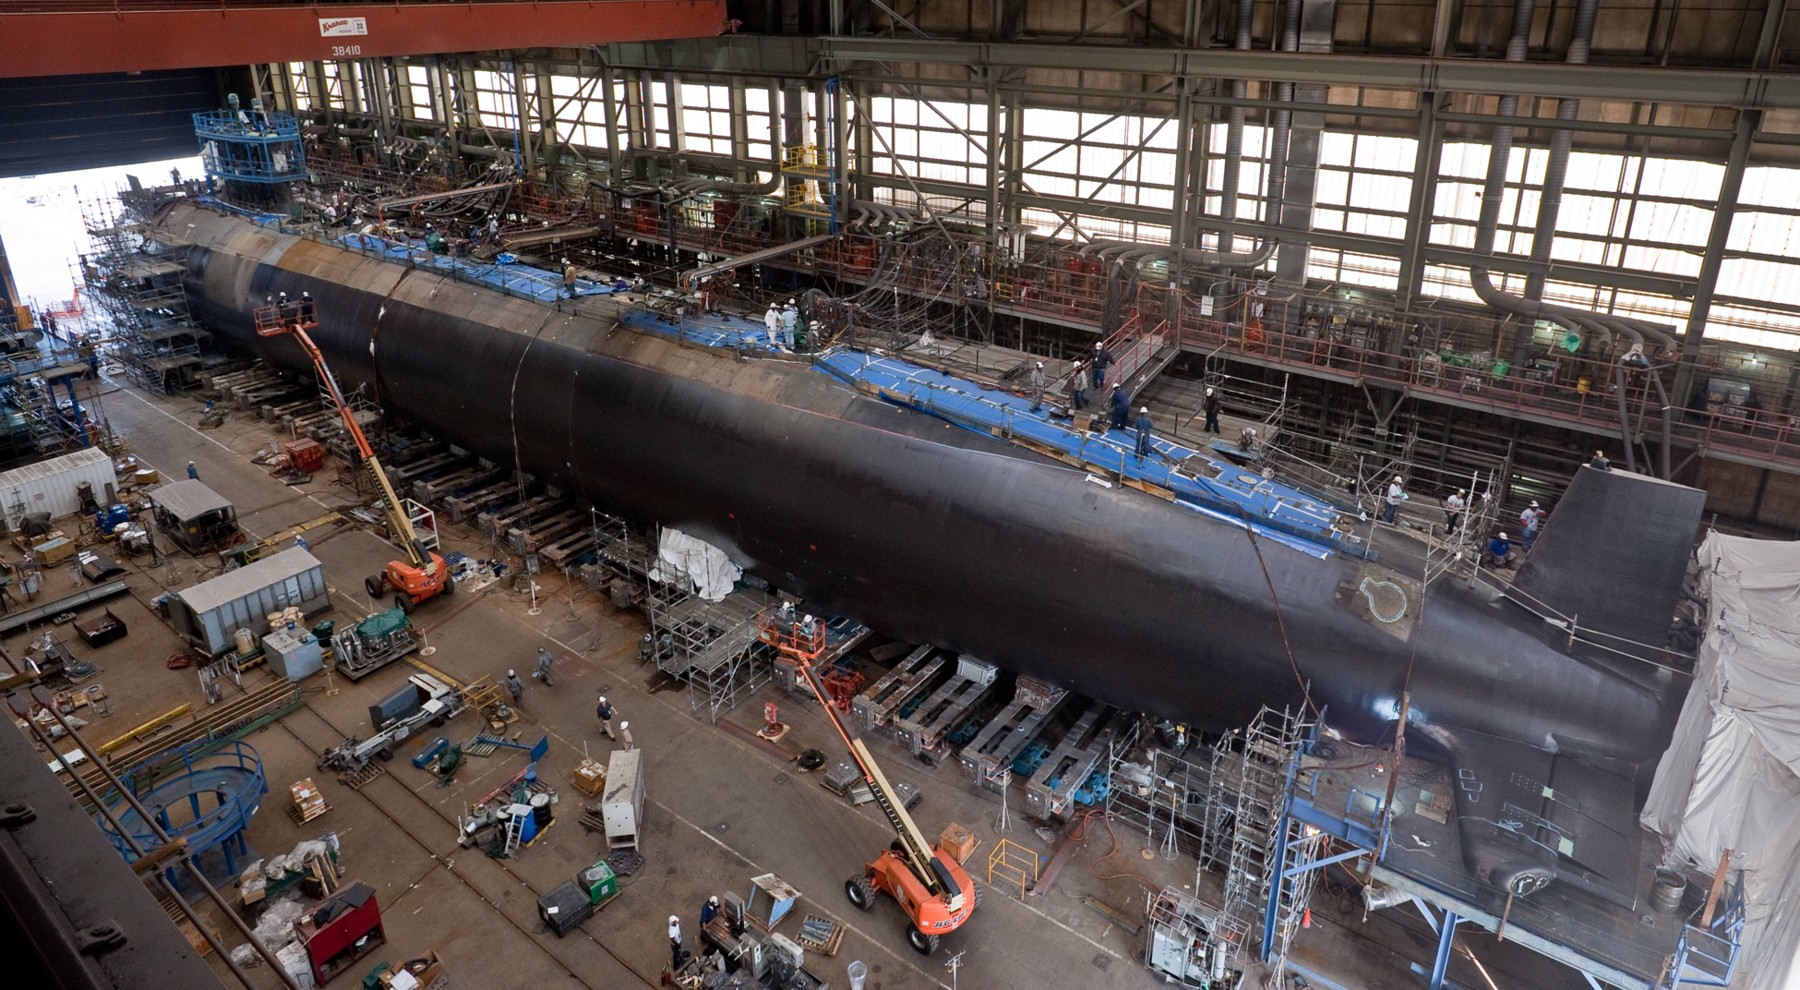 ssn-783 uss minnesota virginia class attack submarine us navy 22 hii newport news